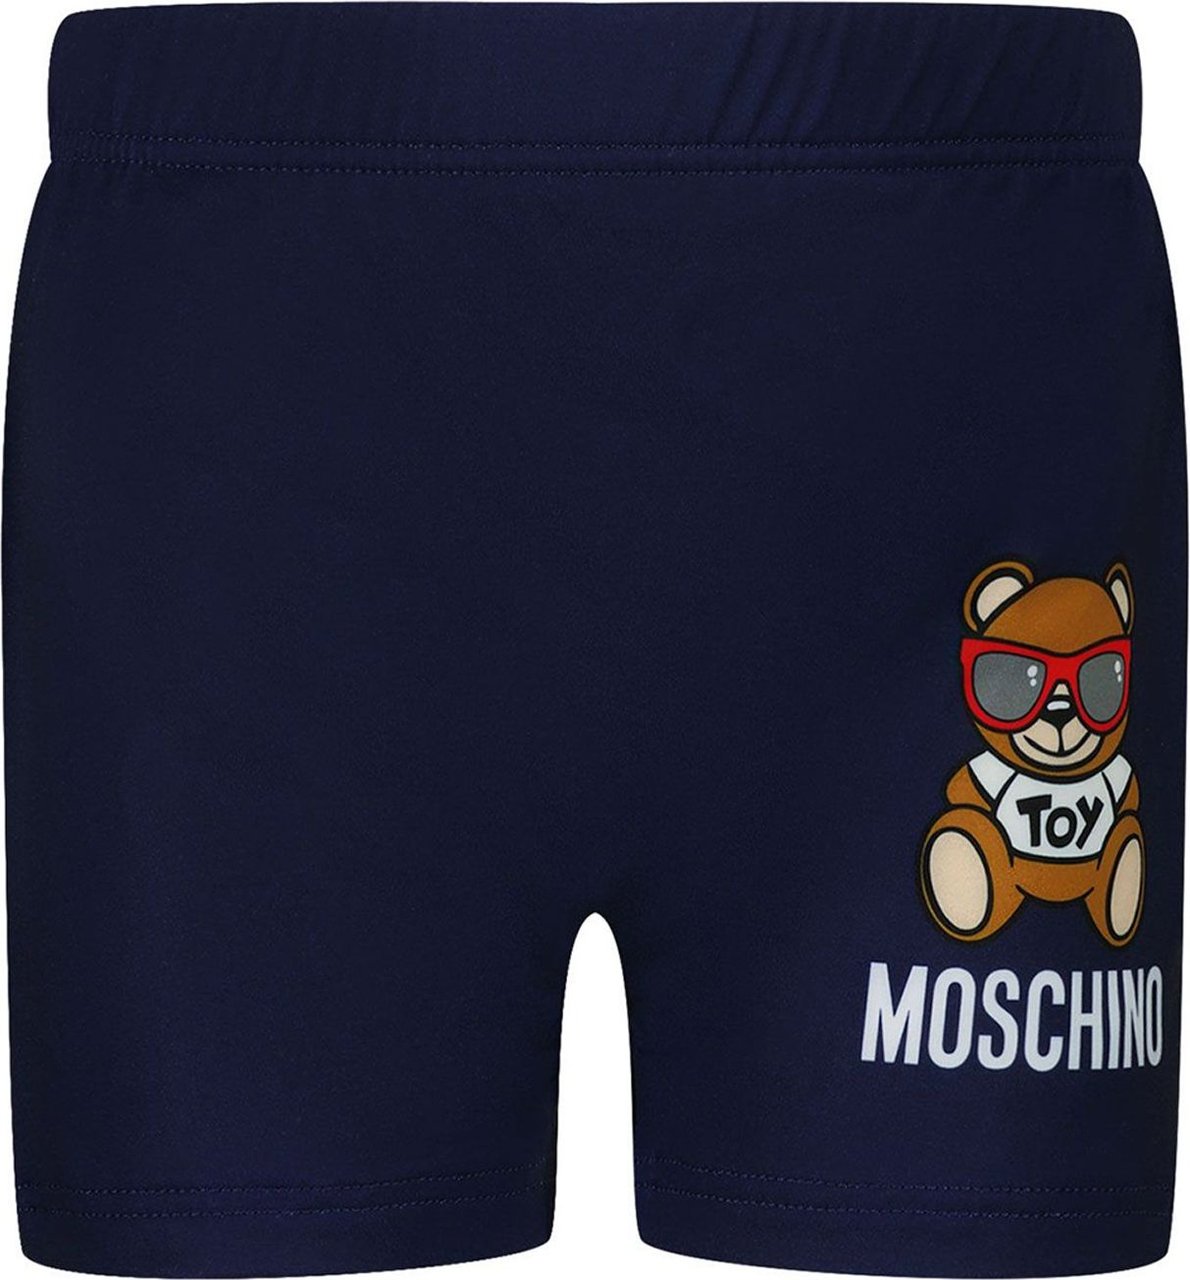 Moschino Baby Badkleding Navy Blauw